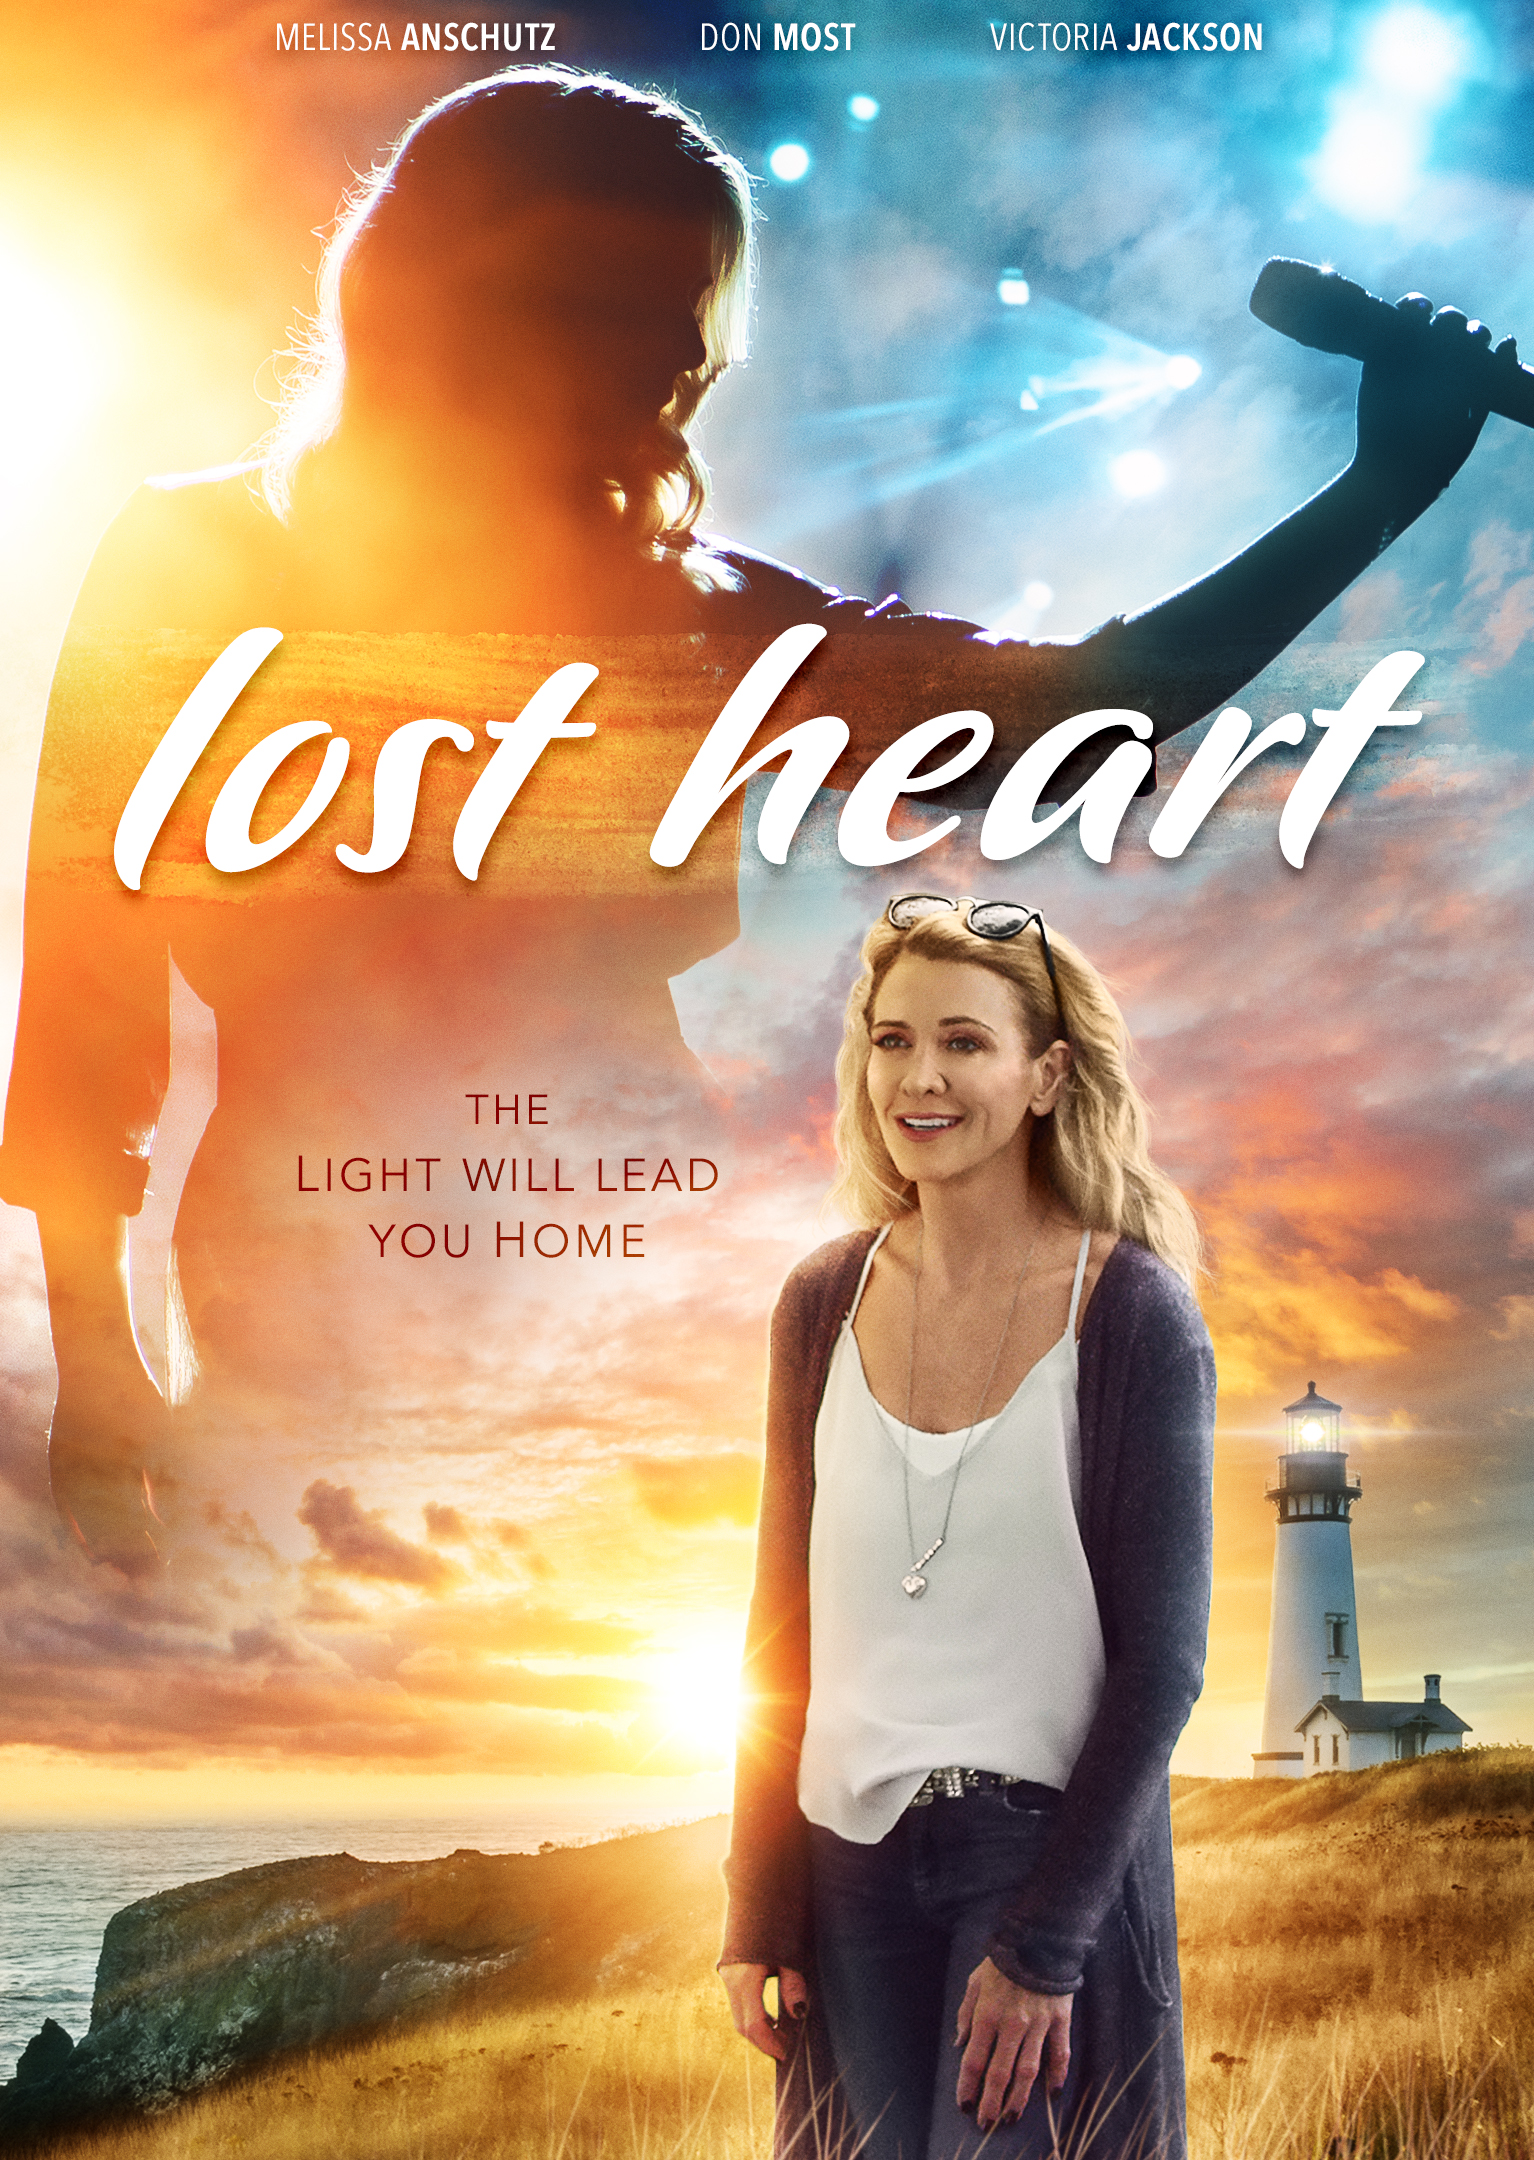 Lost Heart (2020)